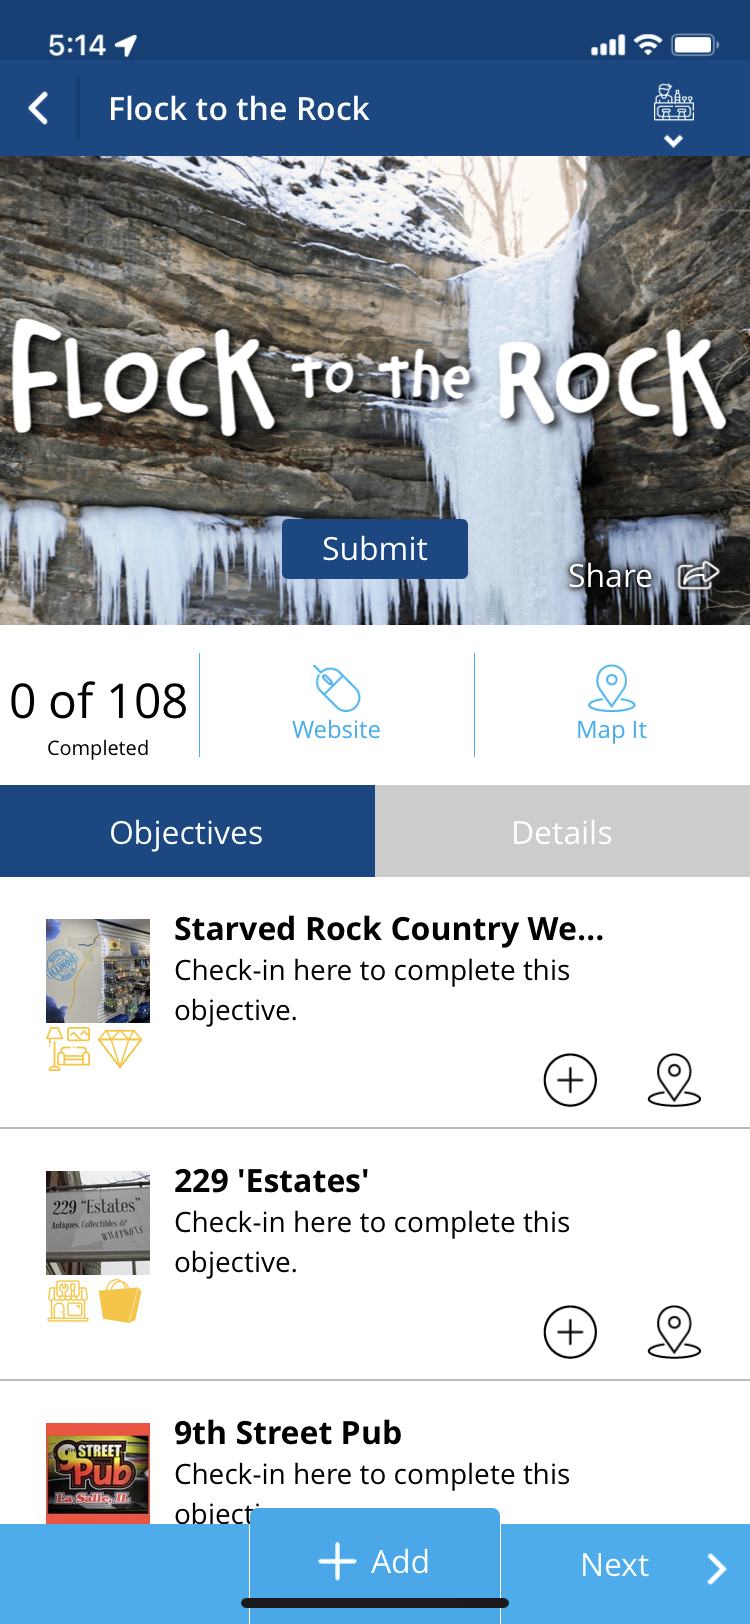 Flock to the Rock passport in the app